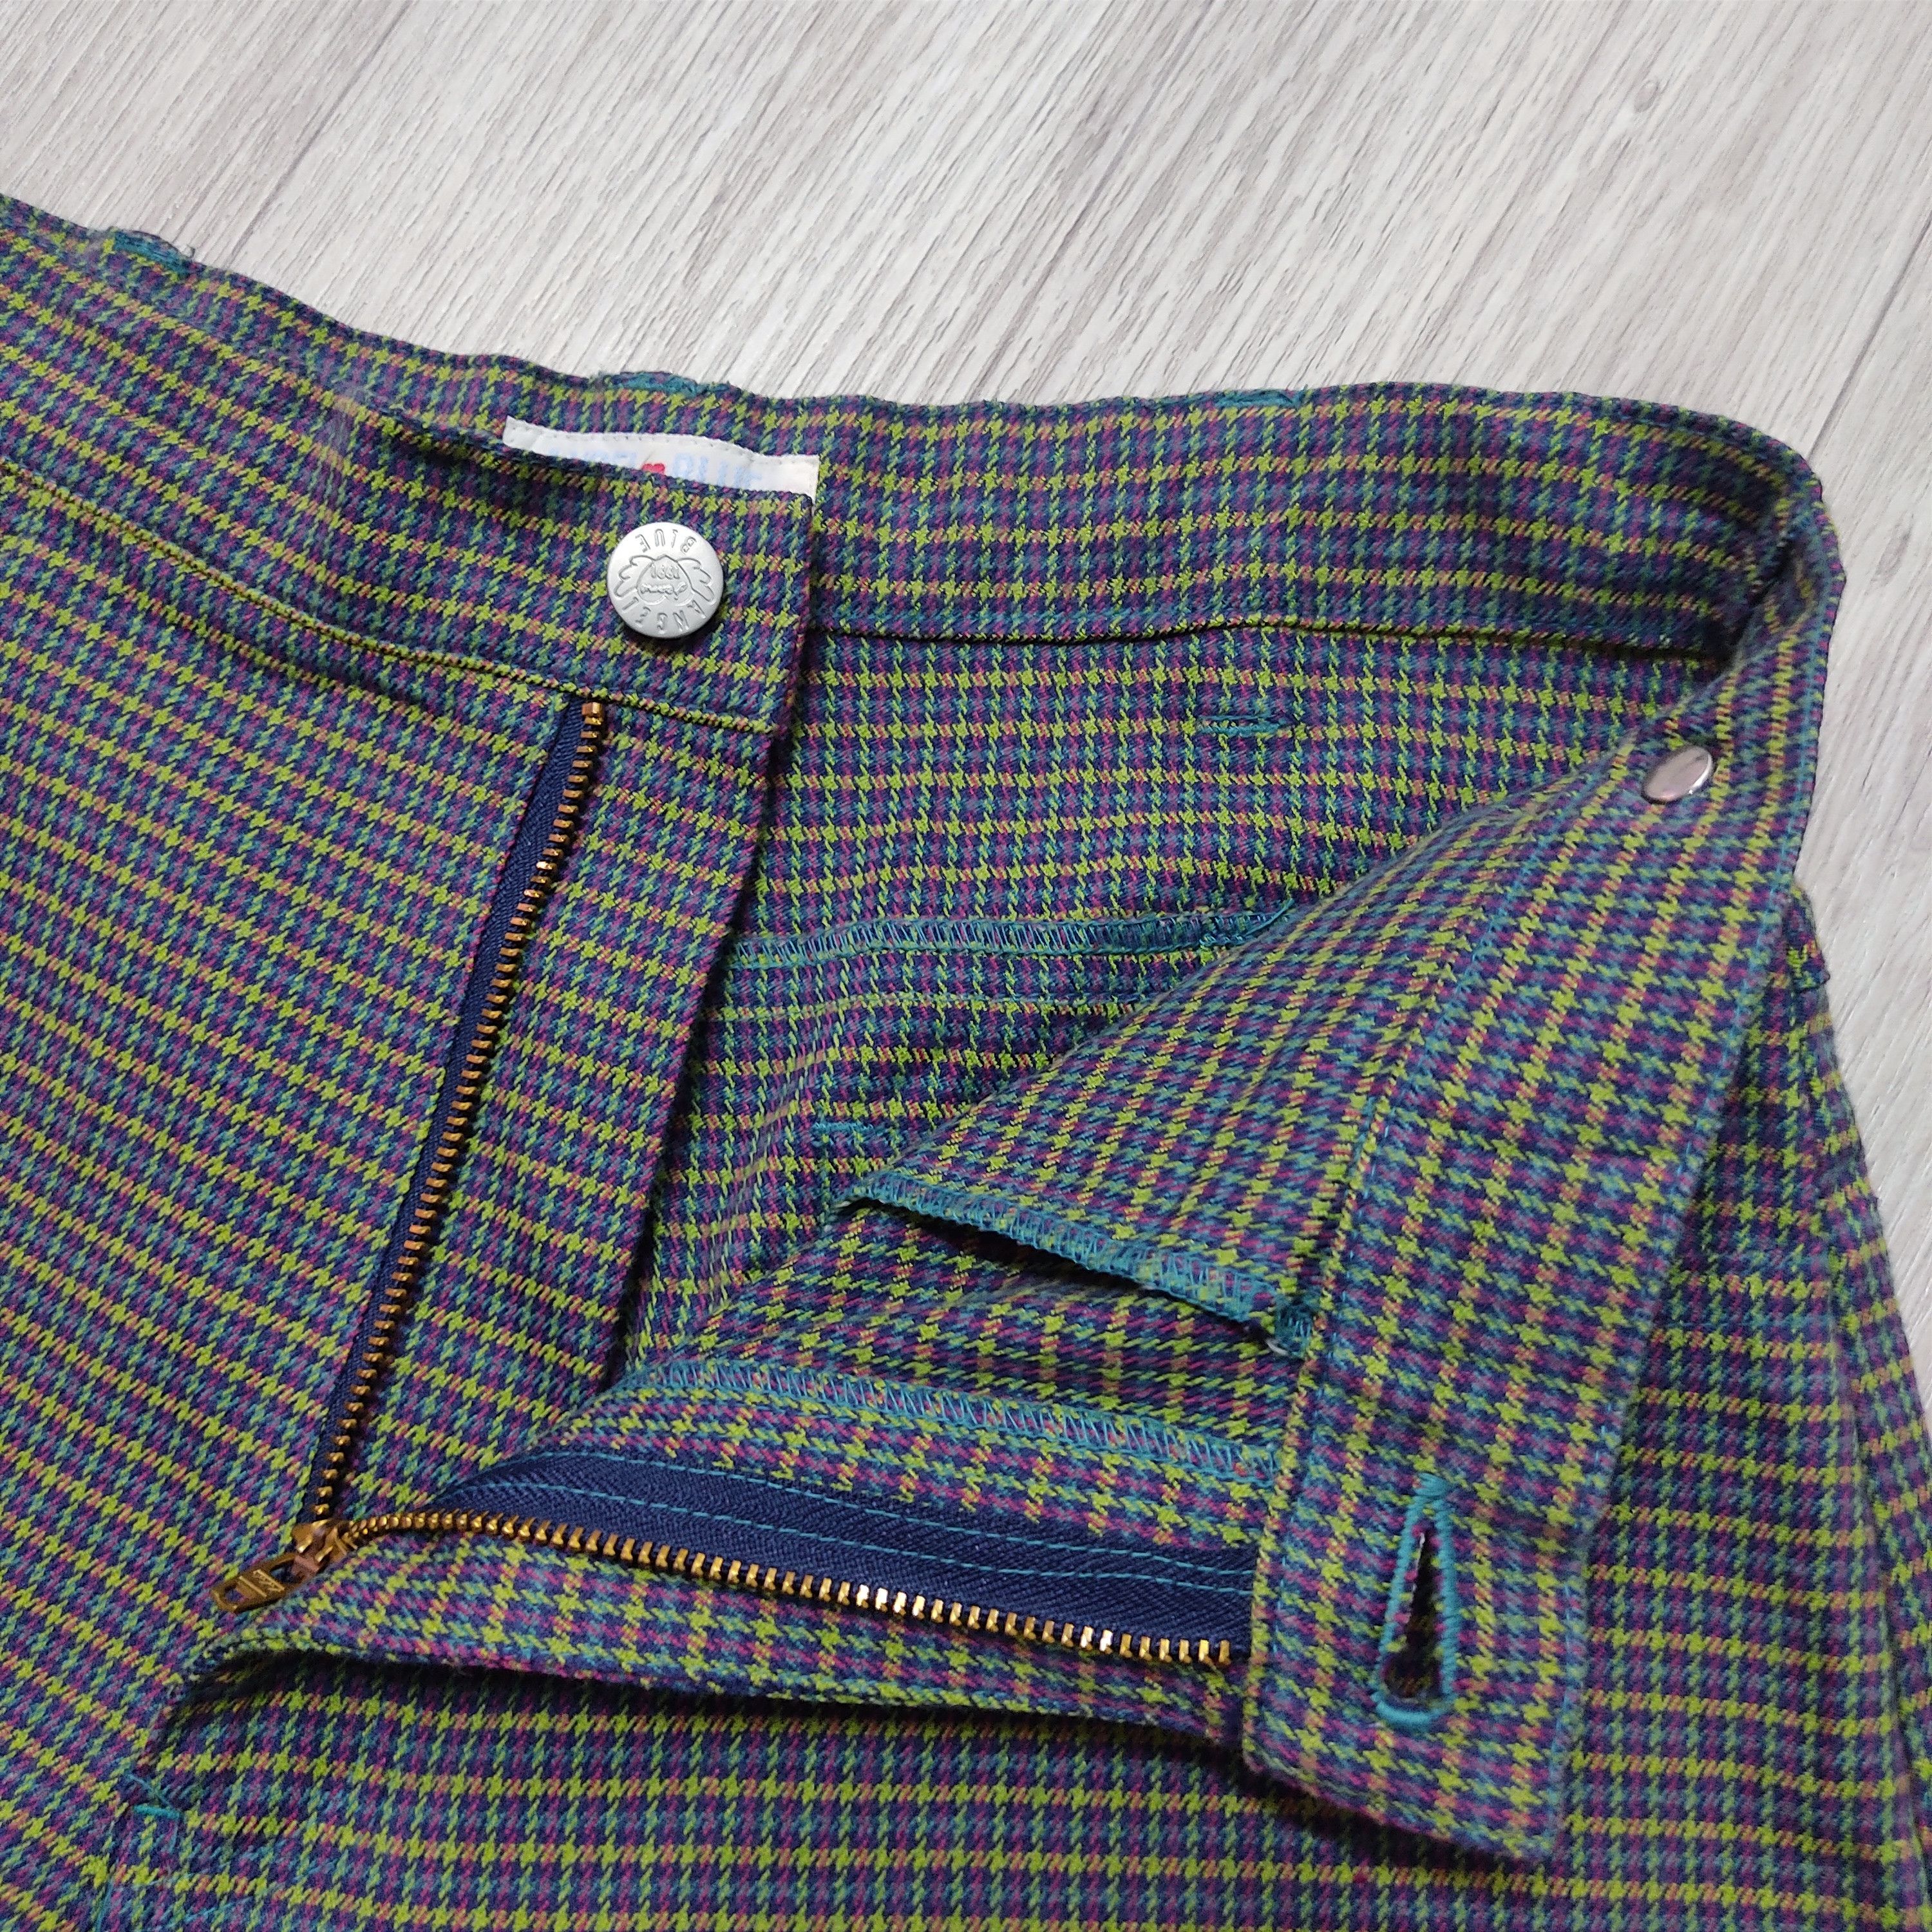 Japanese Brand - ANGEL BLUE Pleated Tartan Checkers Short Pants Skirt - 8